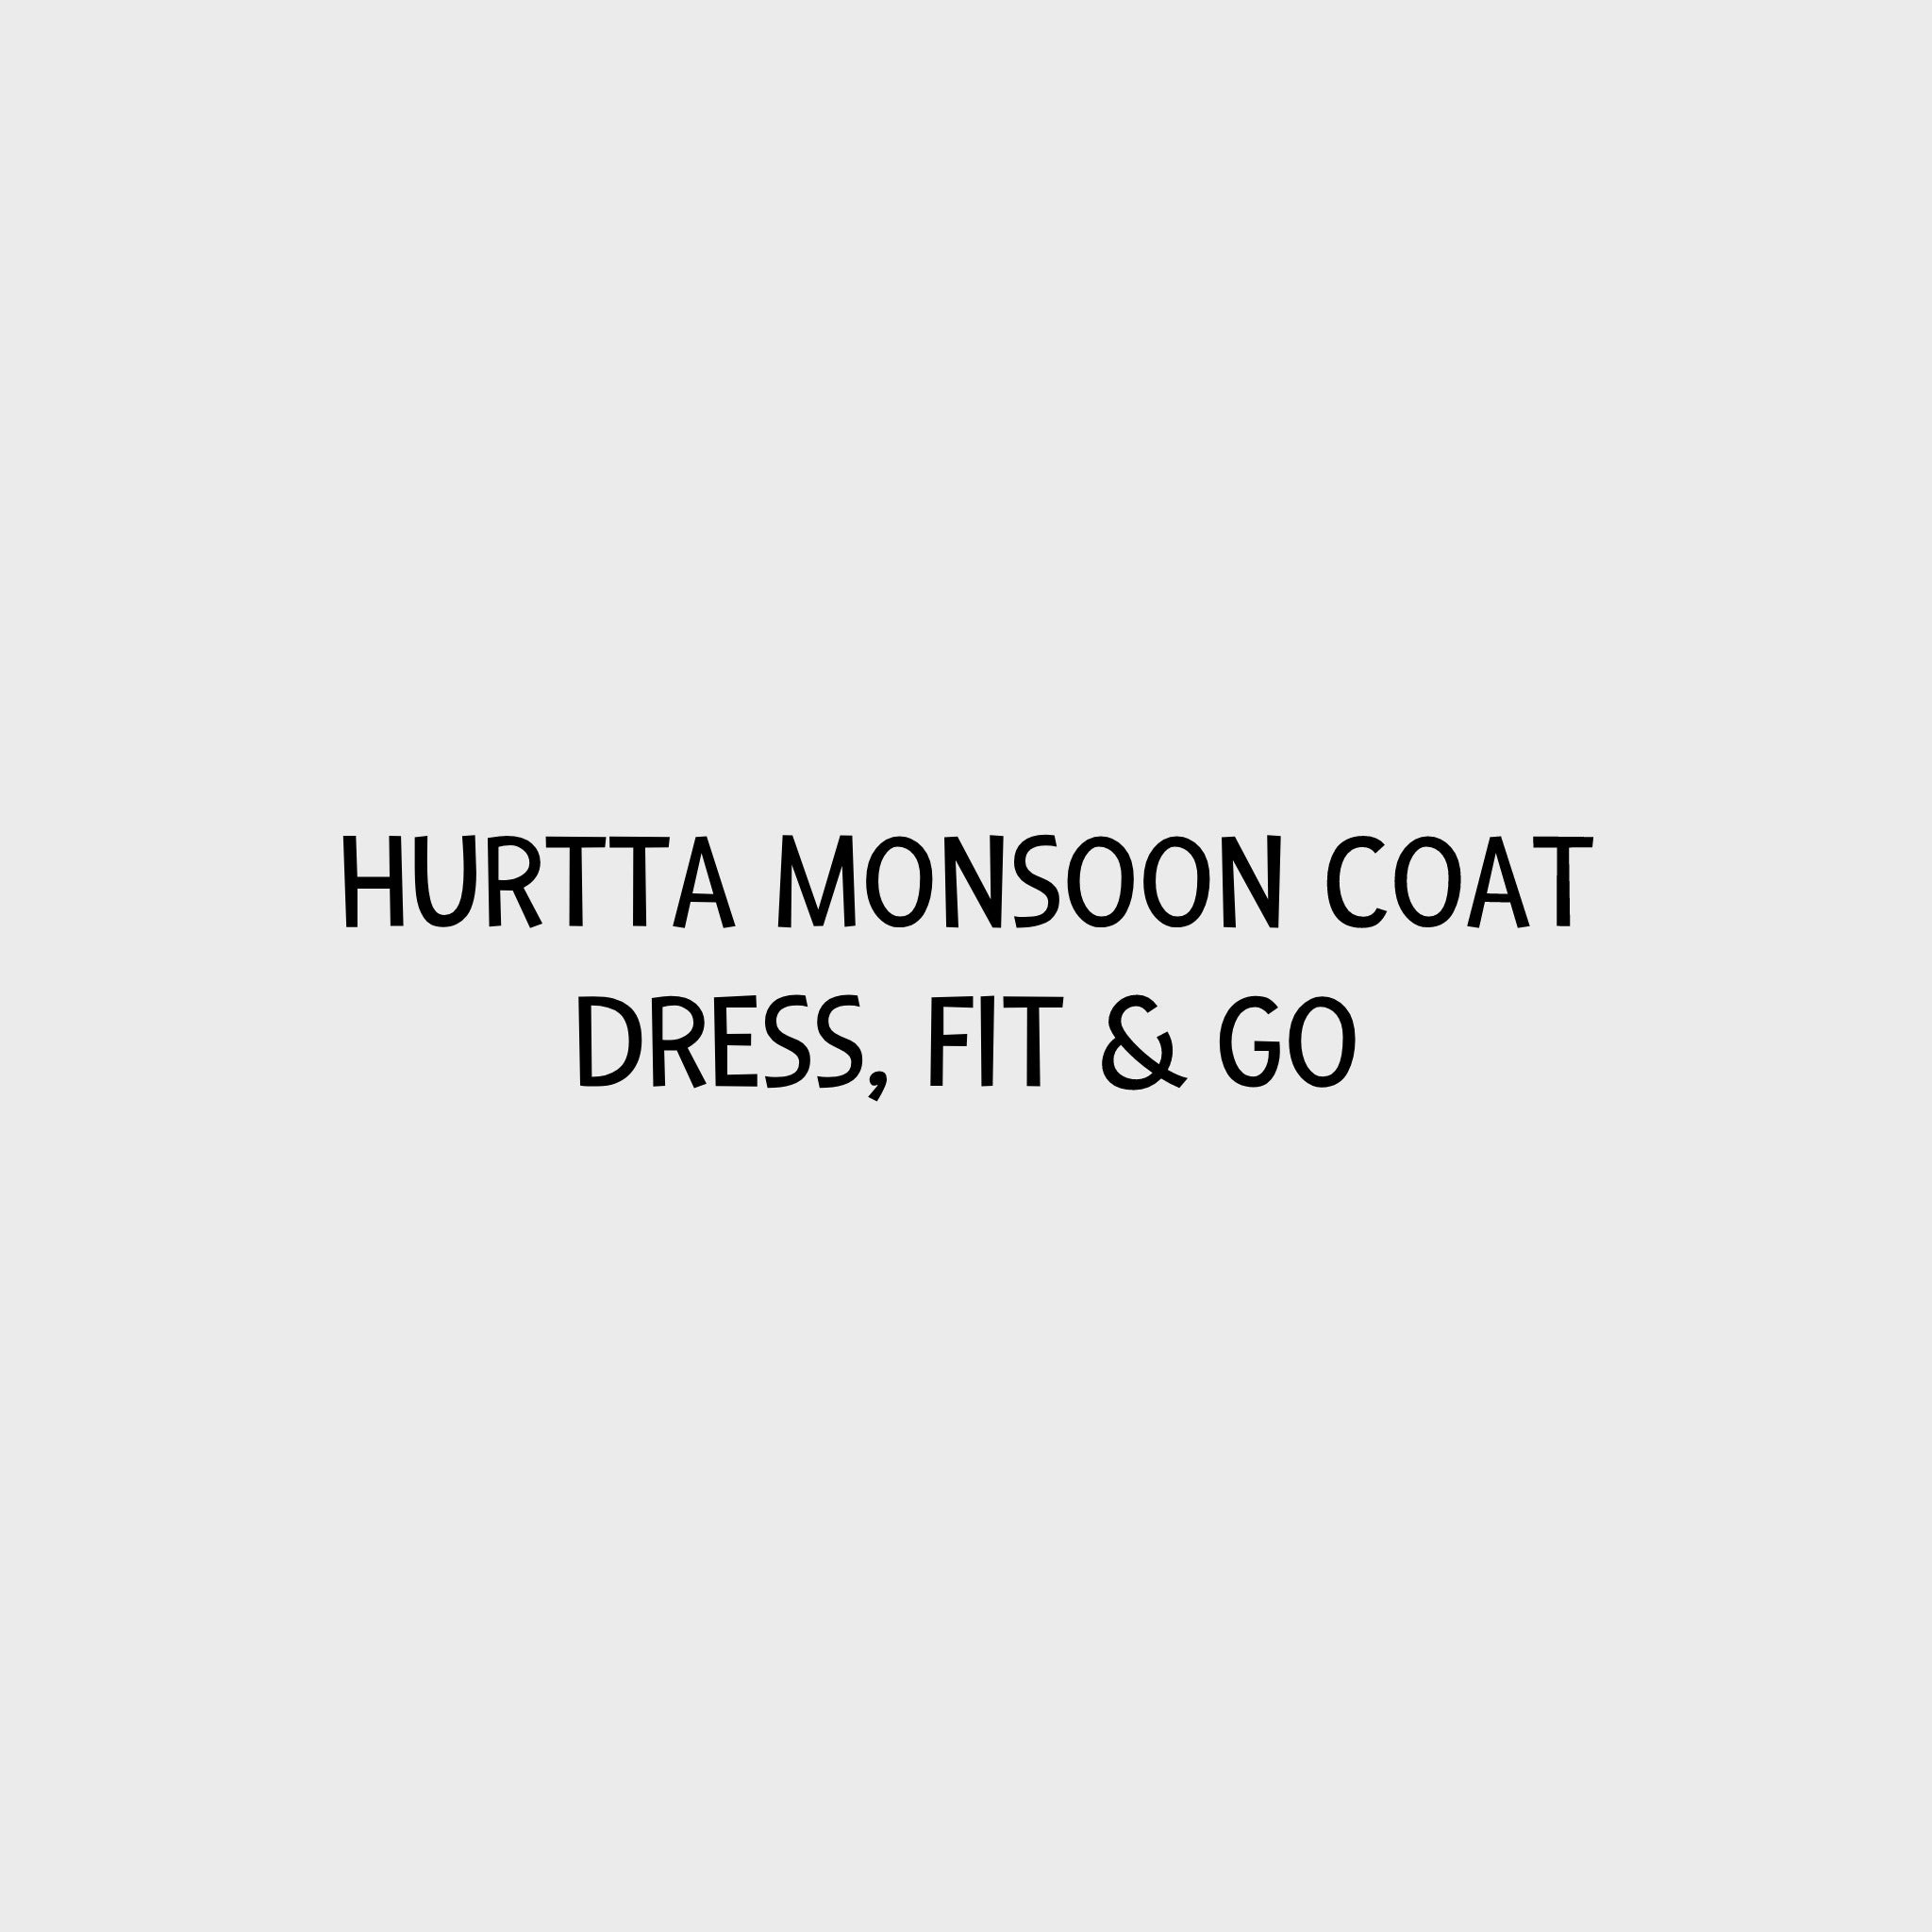 Video - Hurtta Monsoon Coat Dress, Fit & Go